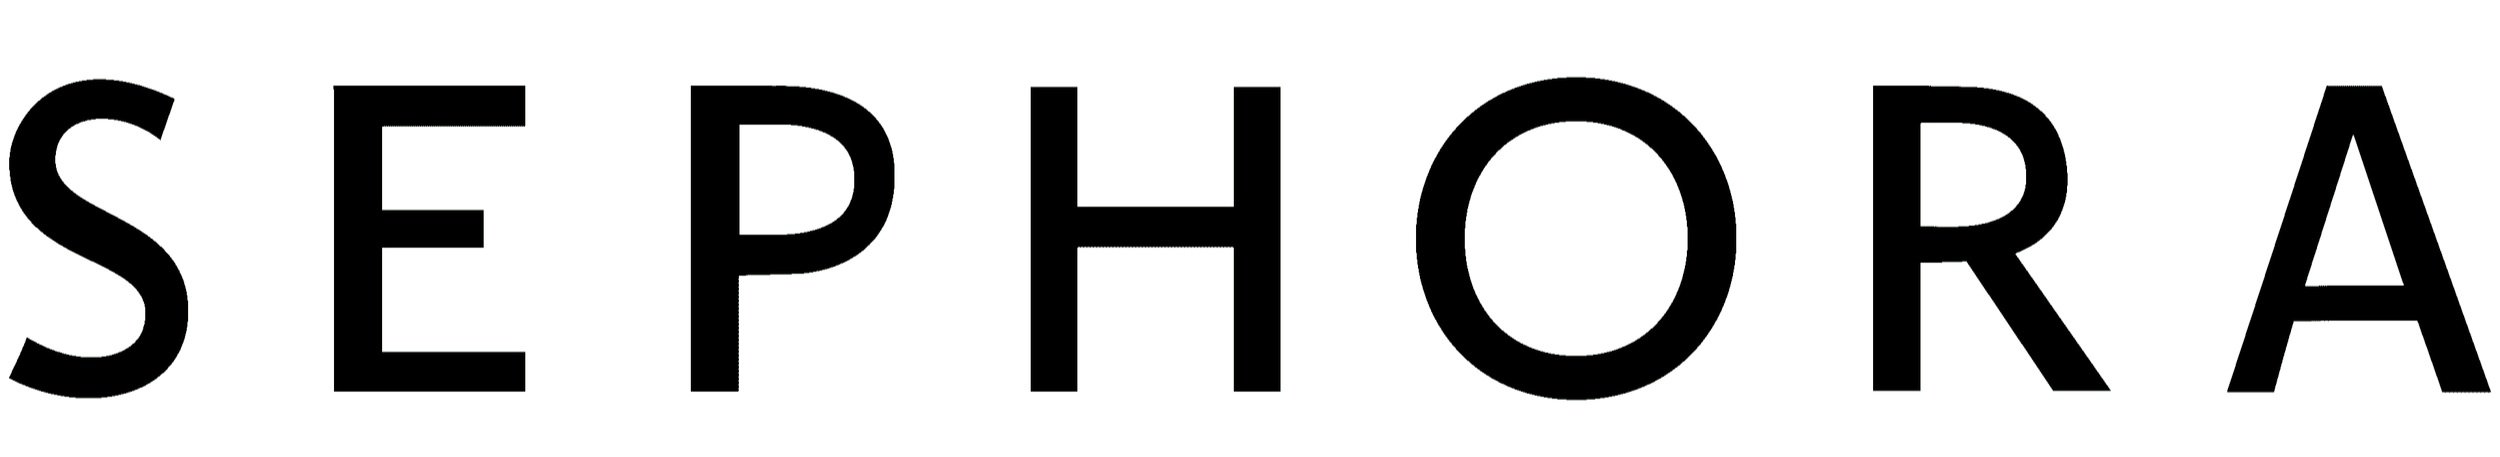 Sephora-Logo.jpg